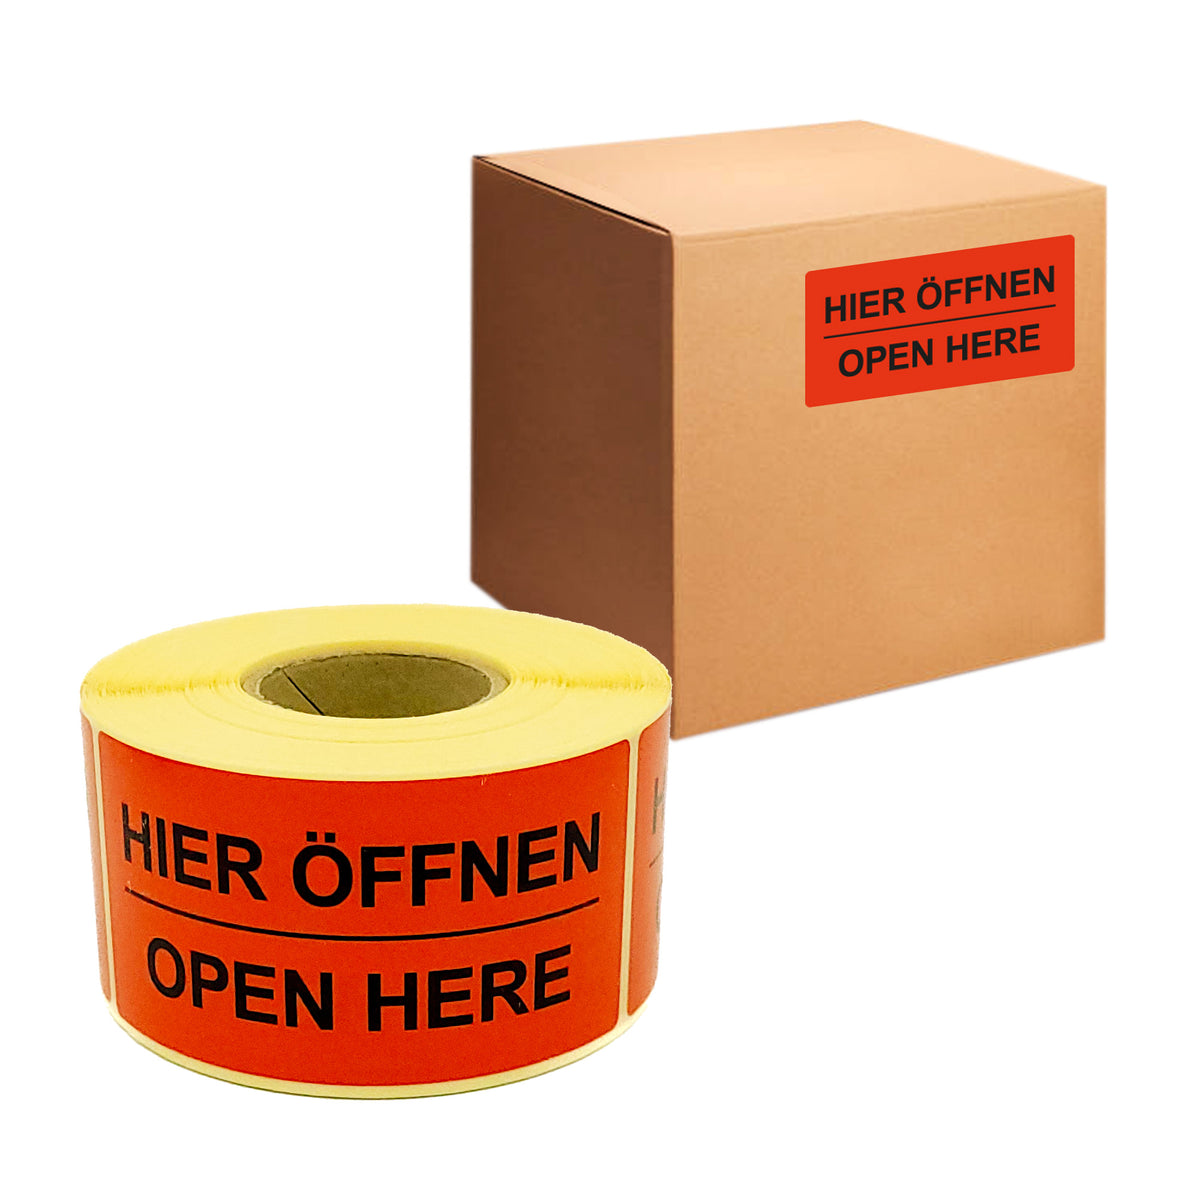 Warning Labels on Roll 100 x 50 mm- Hier öffnen - Open here 500 pcs